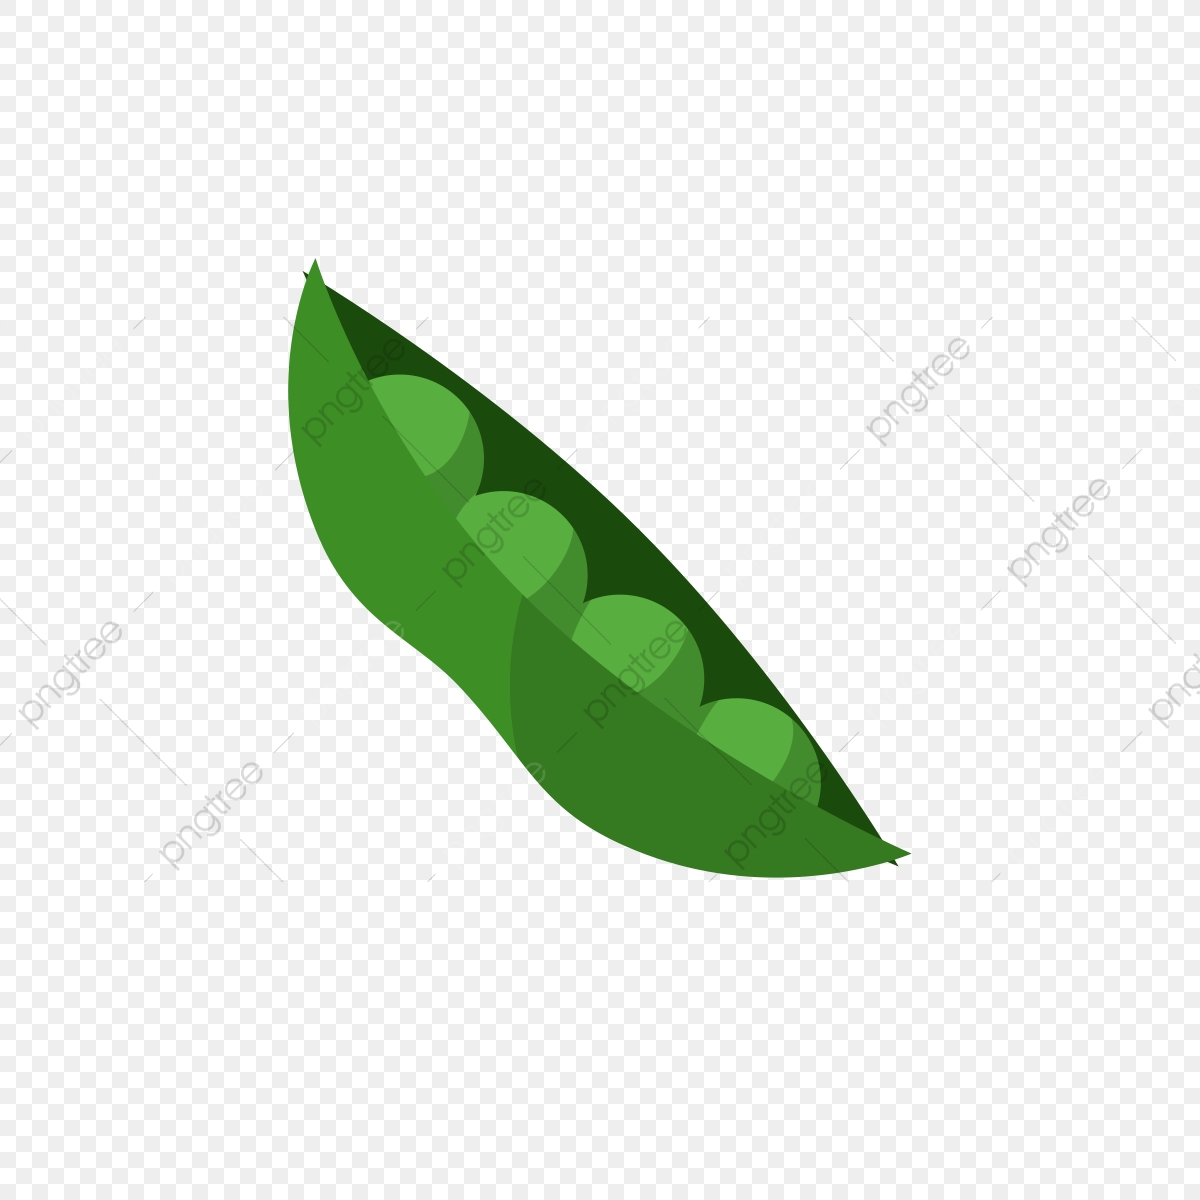 peas clipart icon